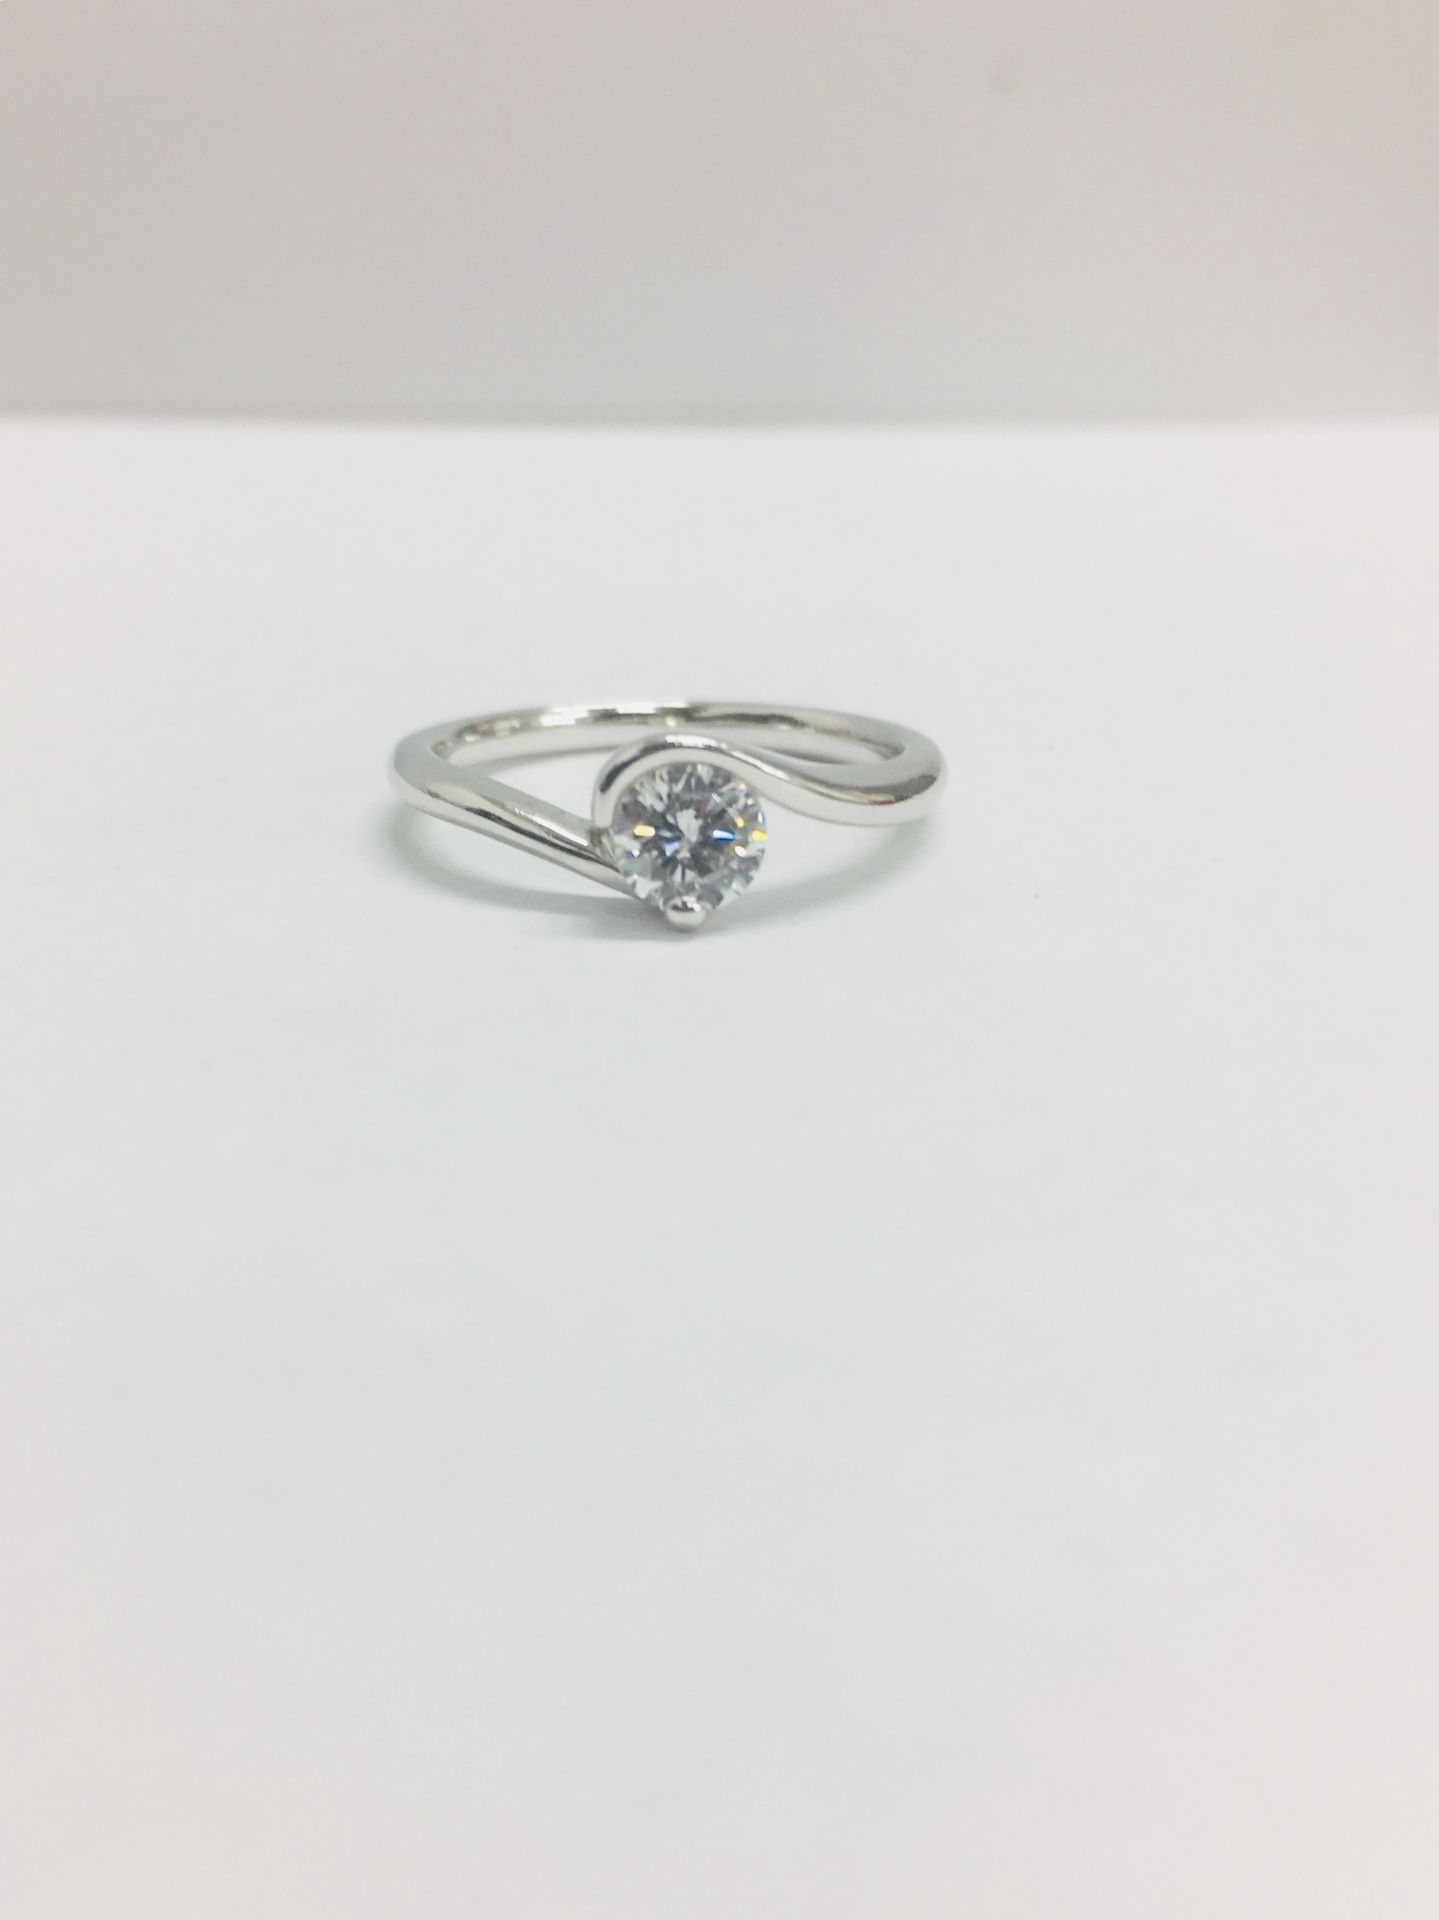 Platinum twist style diamond solitaire ring,0.50ct h colour vs clarity diamond(clarity enhanced),4. - Image 2 of 6